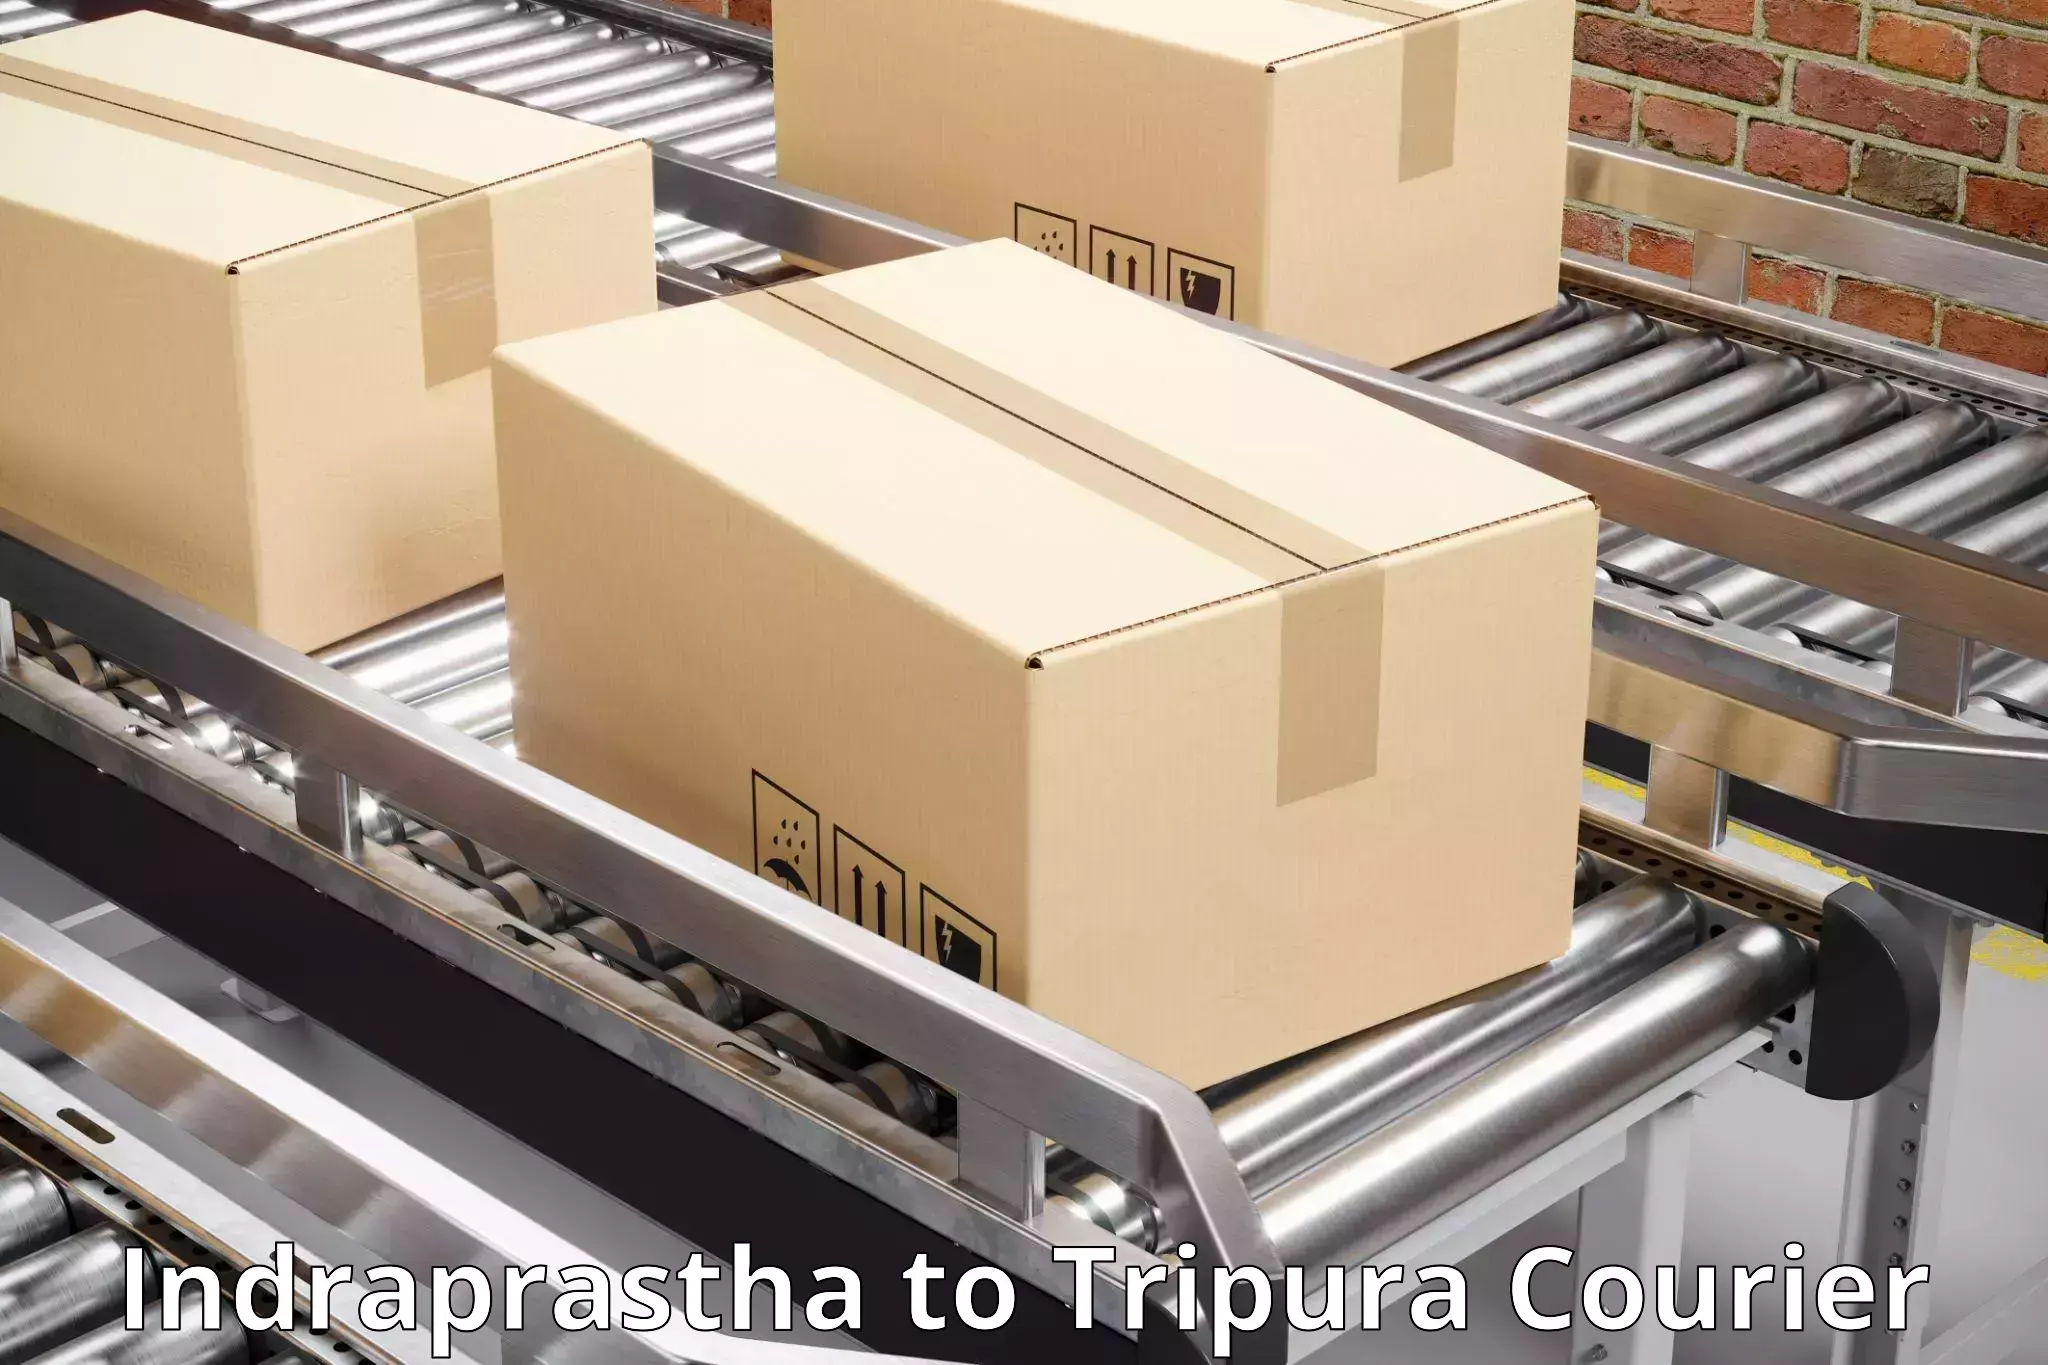 Global logistics network Indraprastha to South Tripura